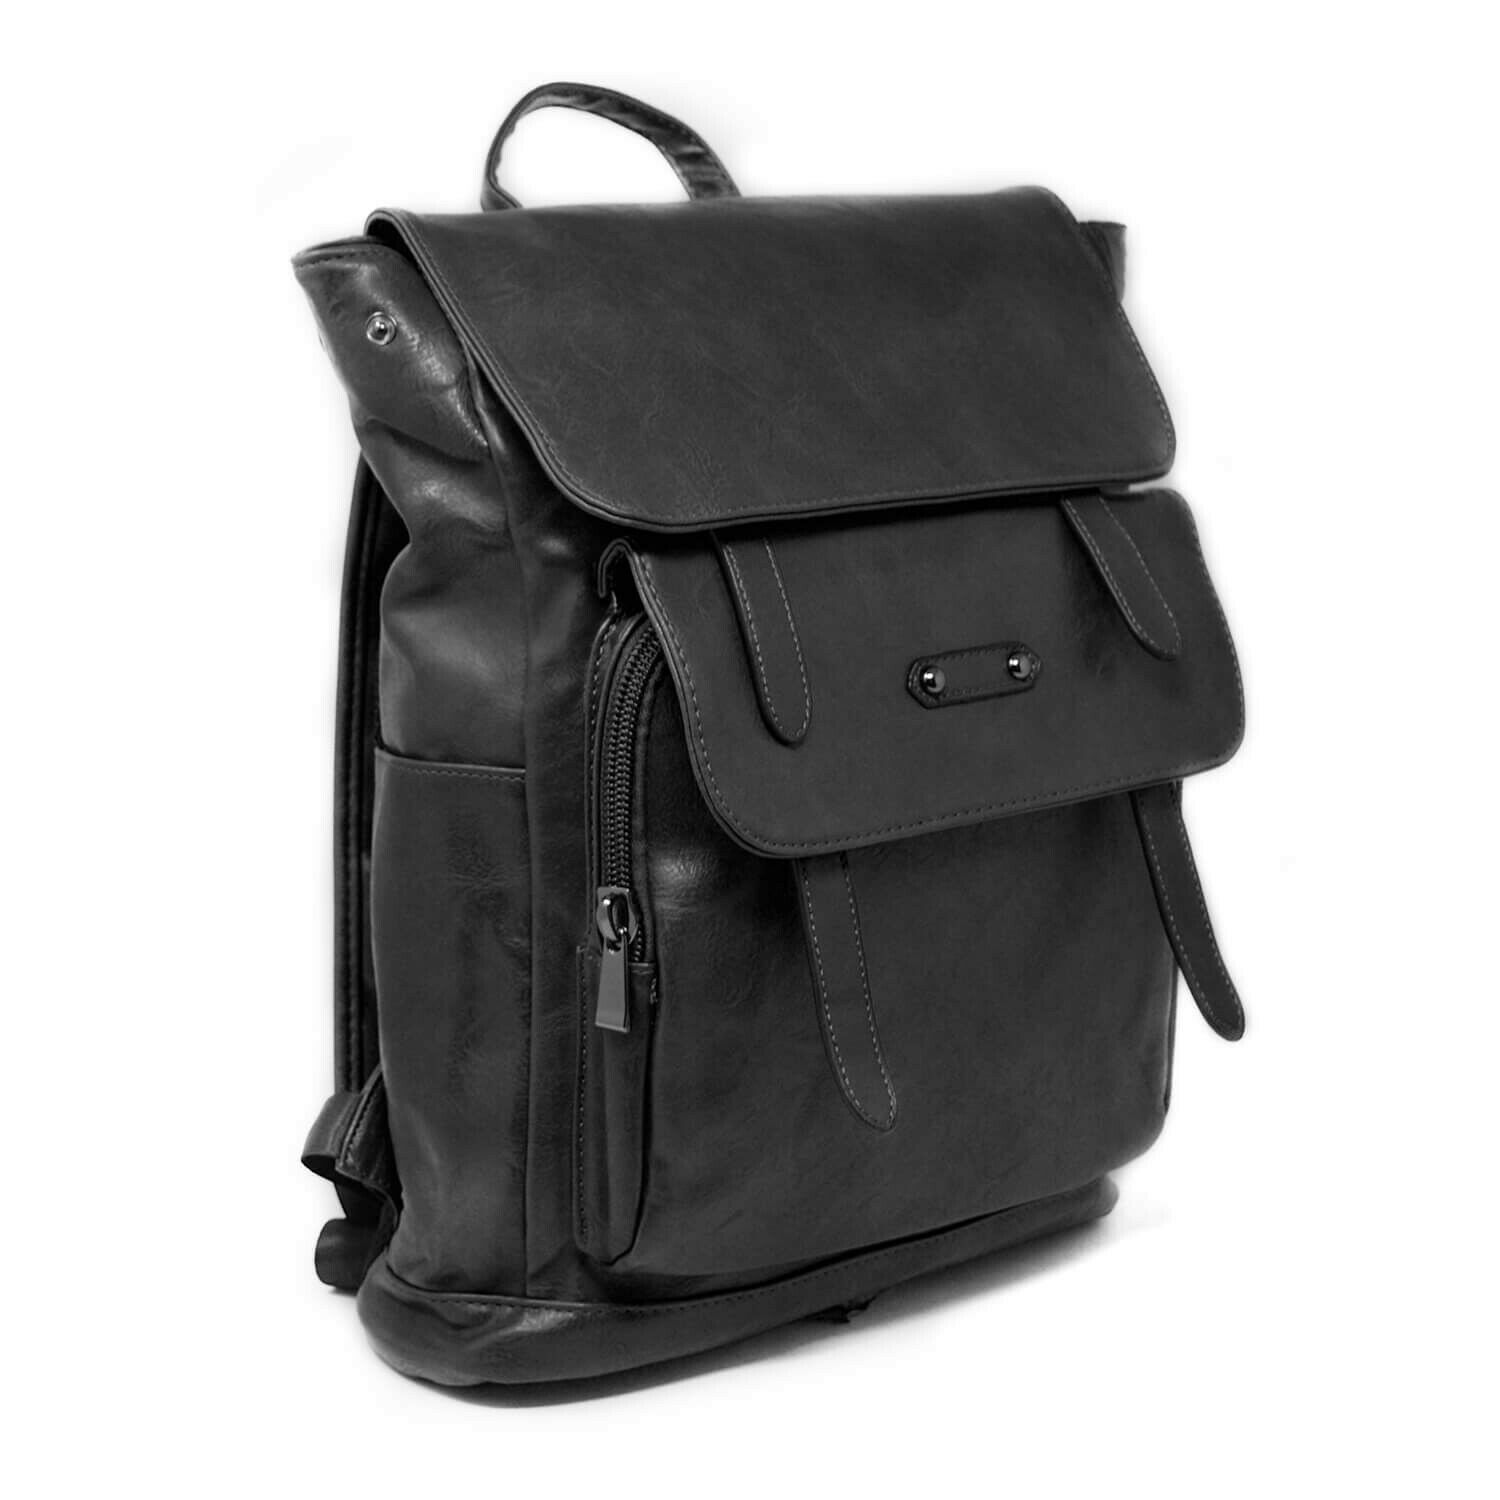 2. Professional backpack pu/1b